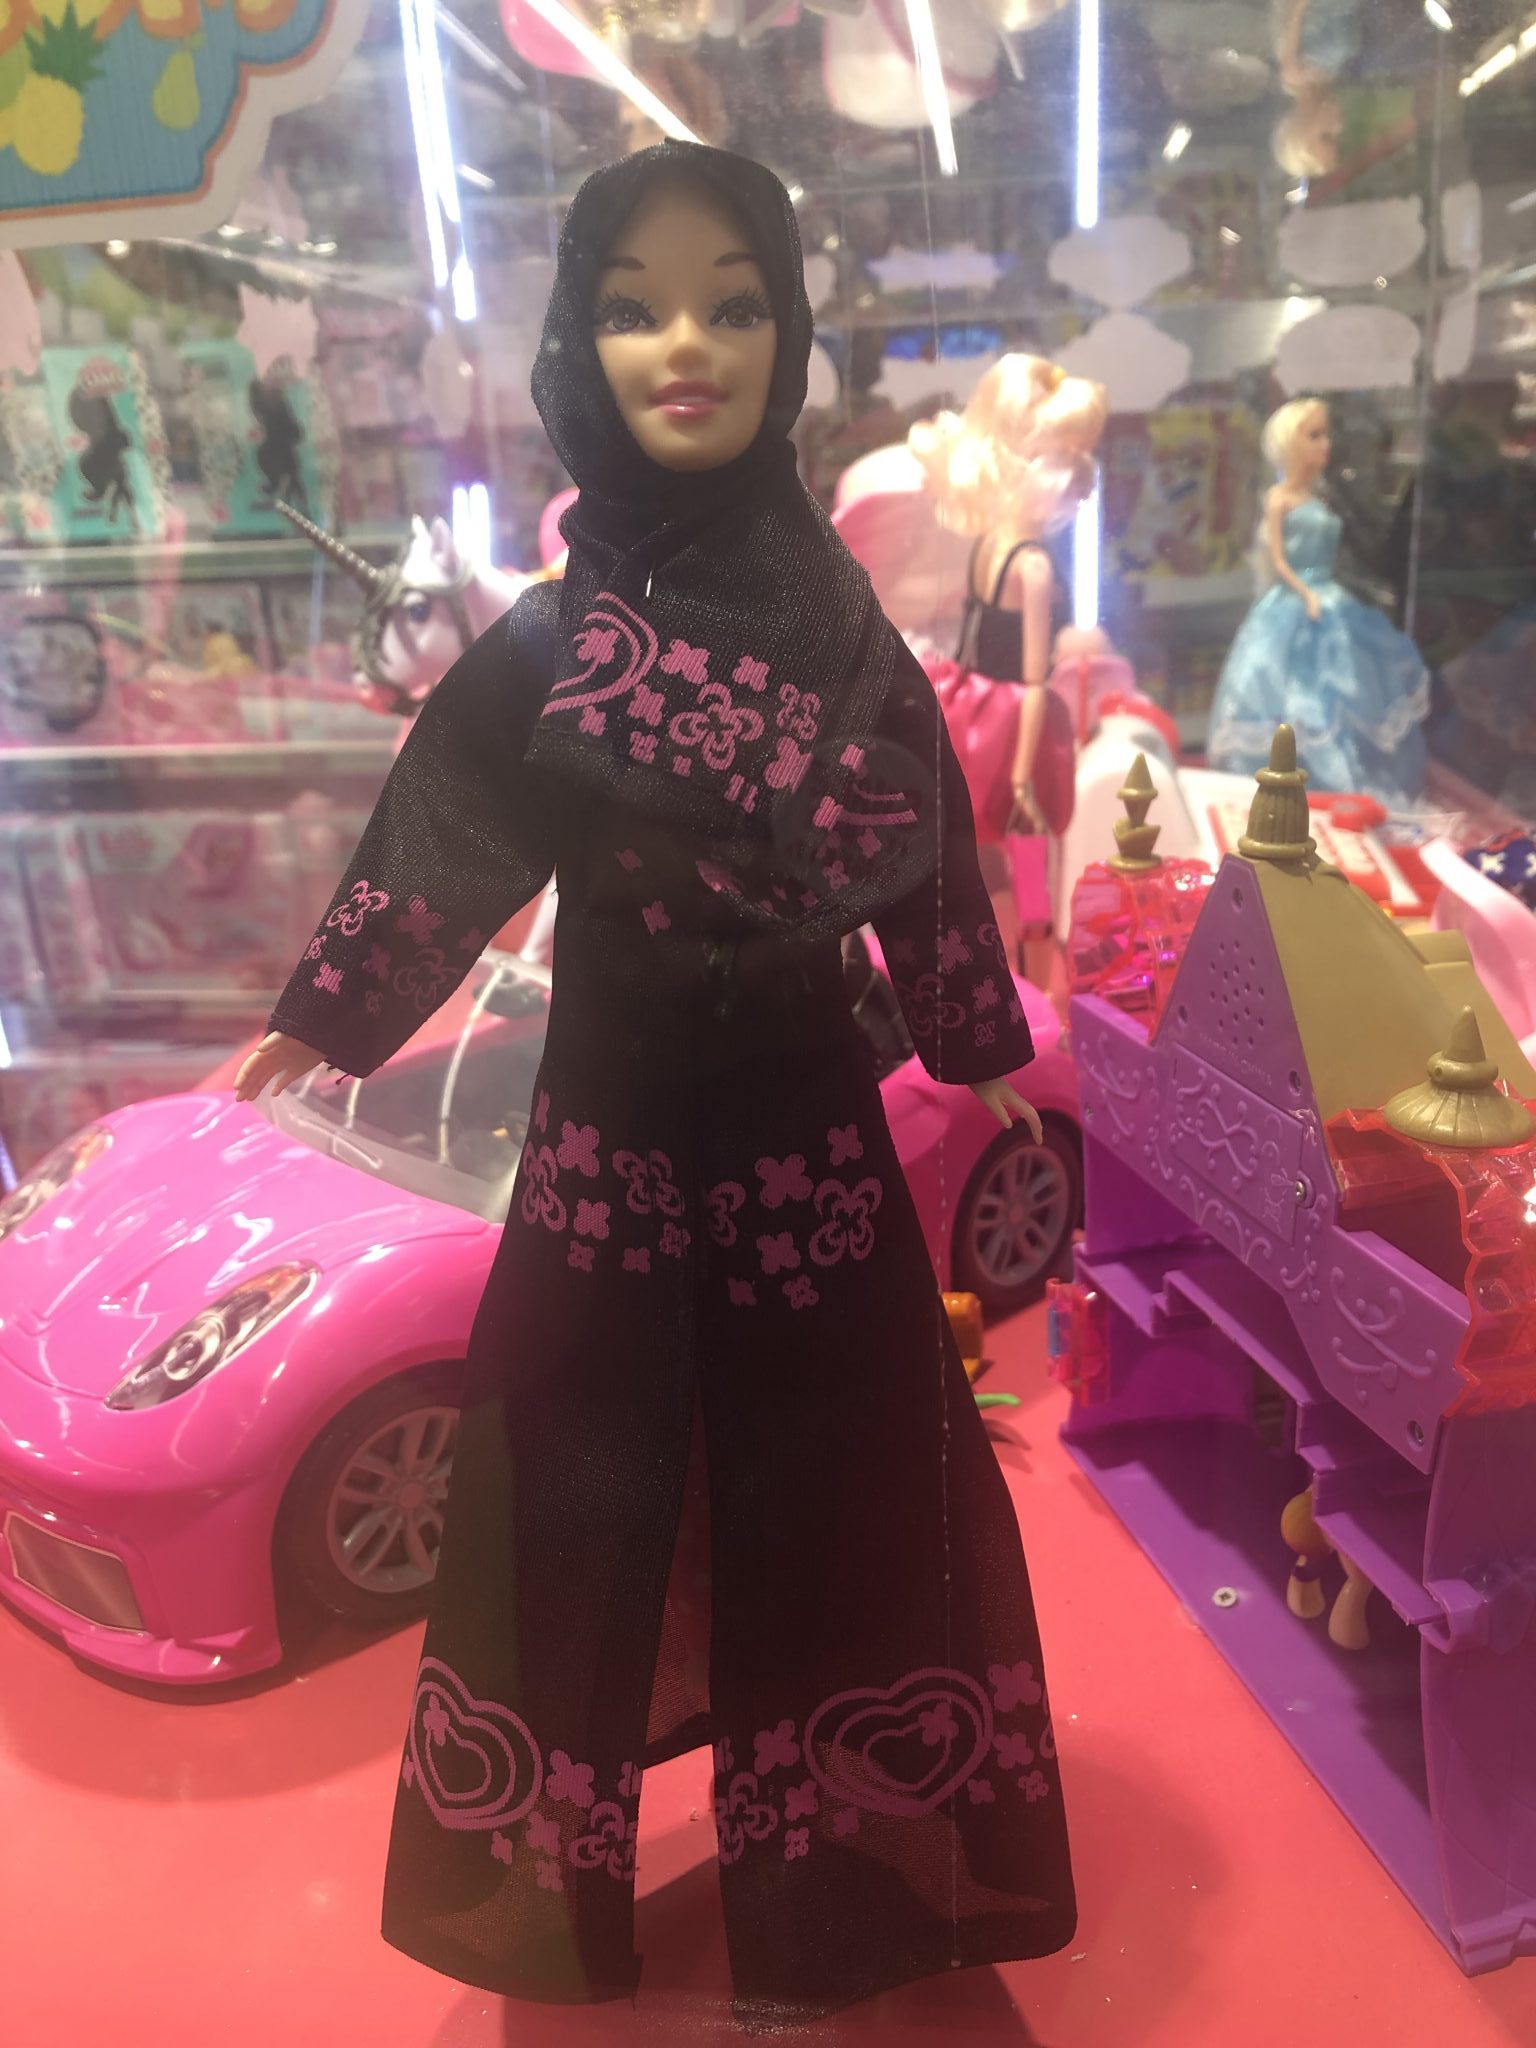 Barbie muçulmana